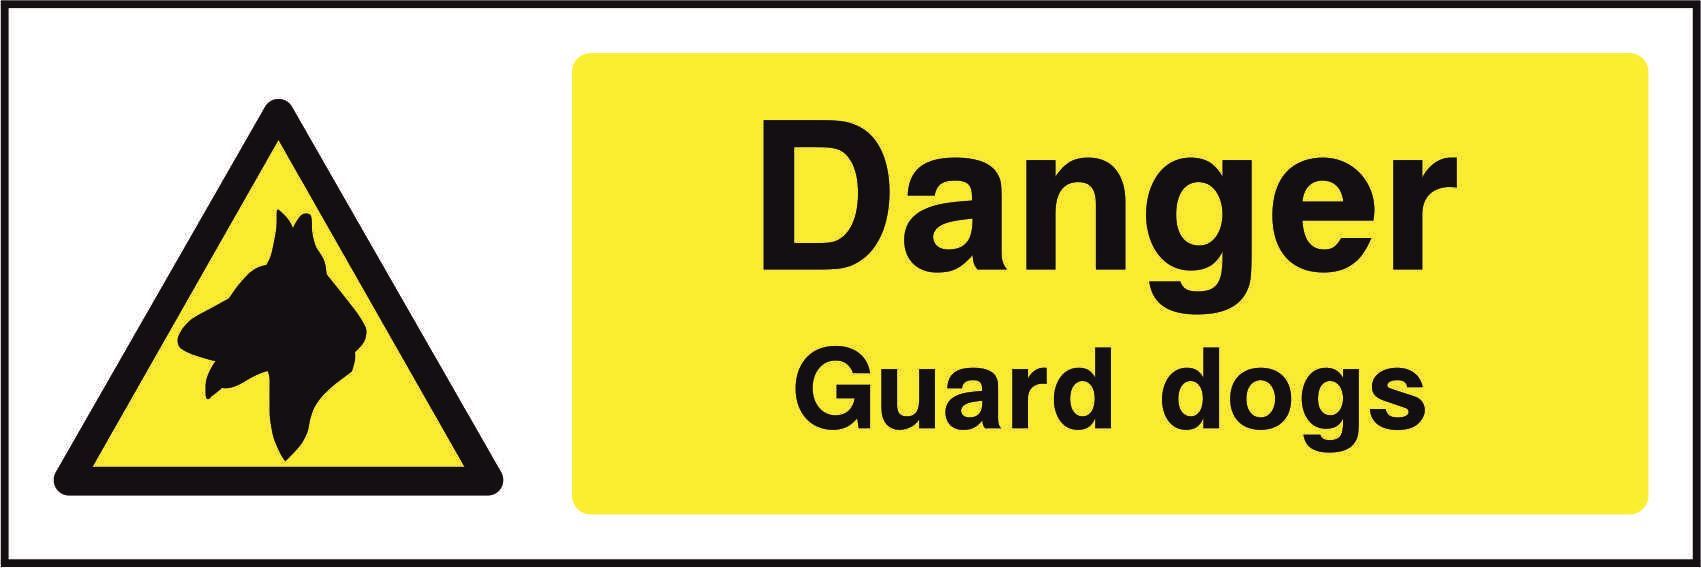 Danger Guard dogs